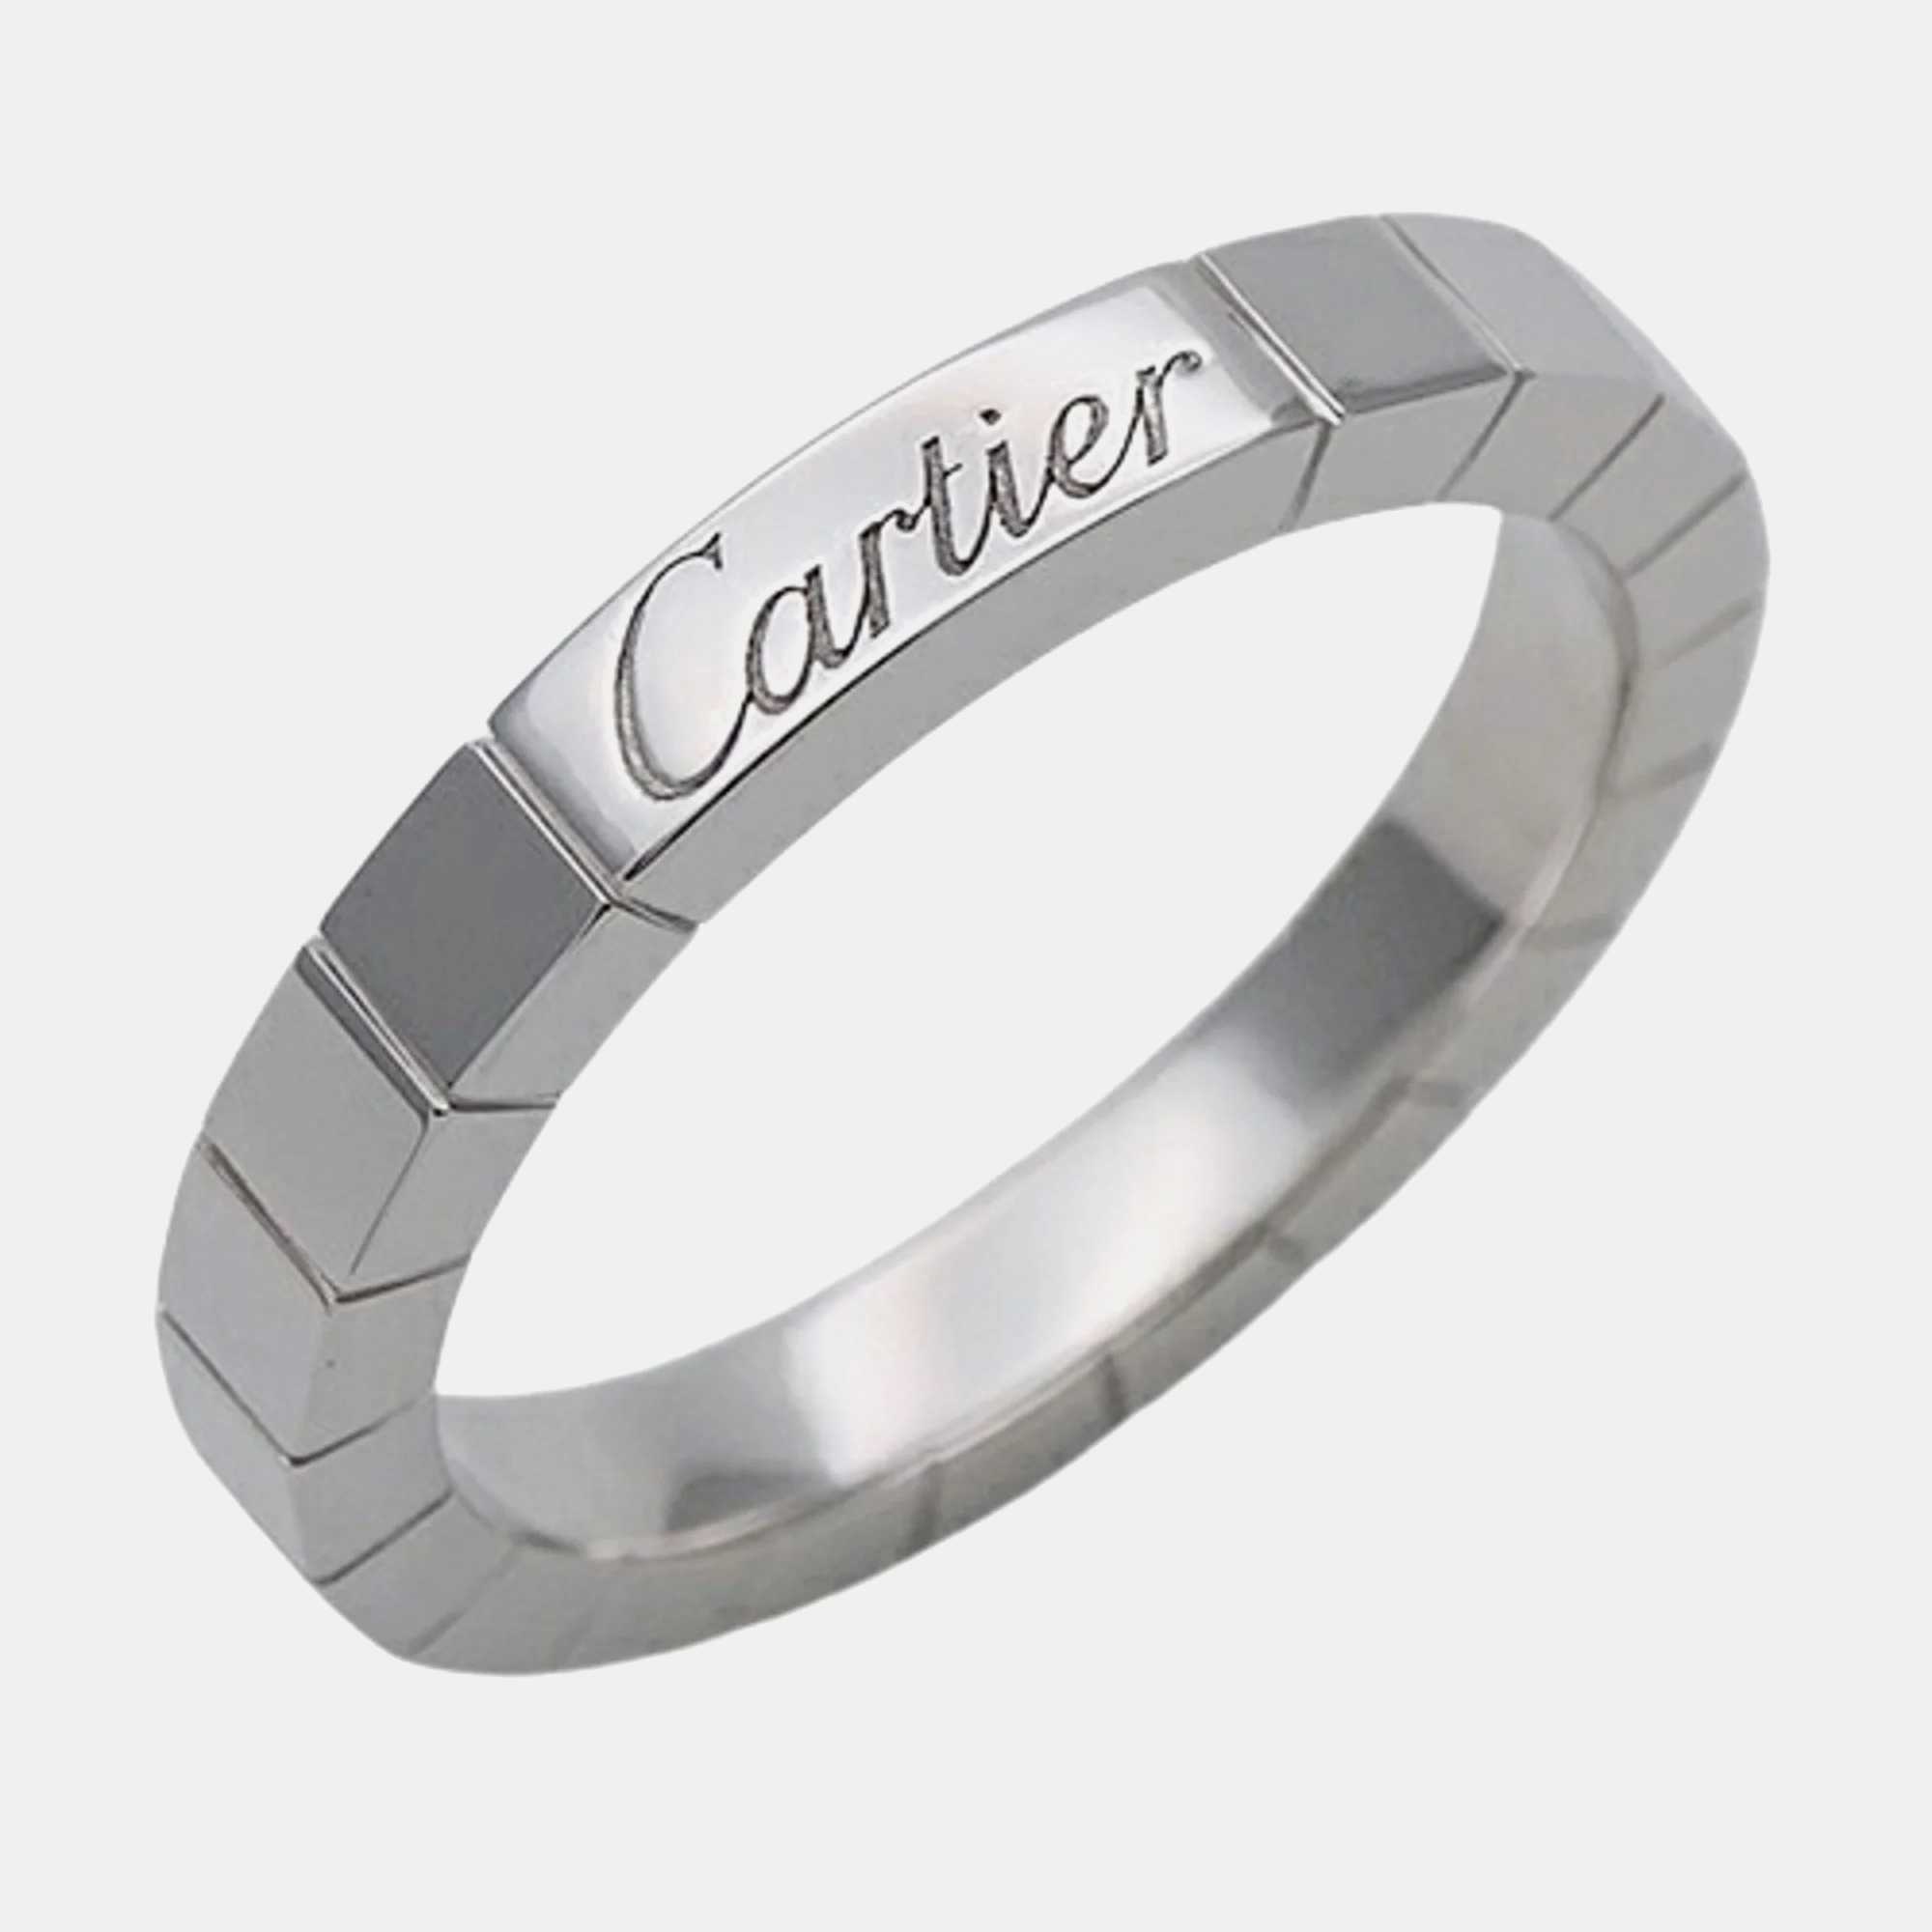 Cartier 18k white gold lanieres band ring eu 53